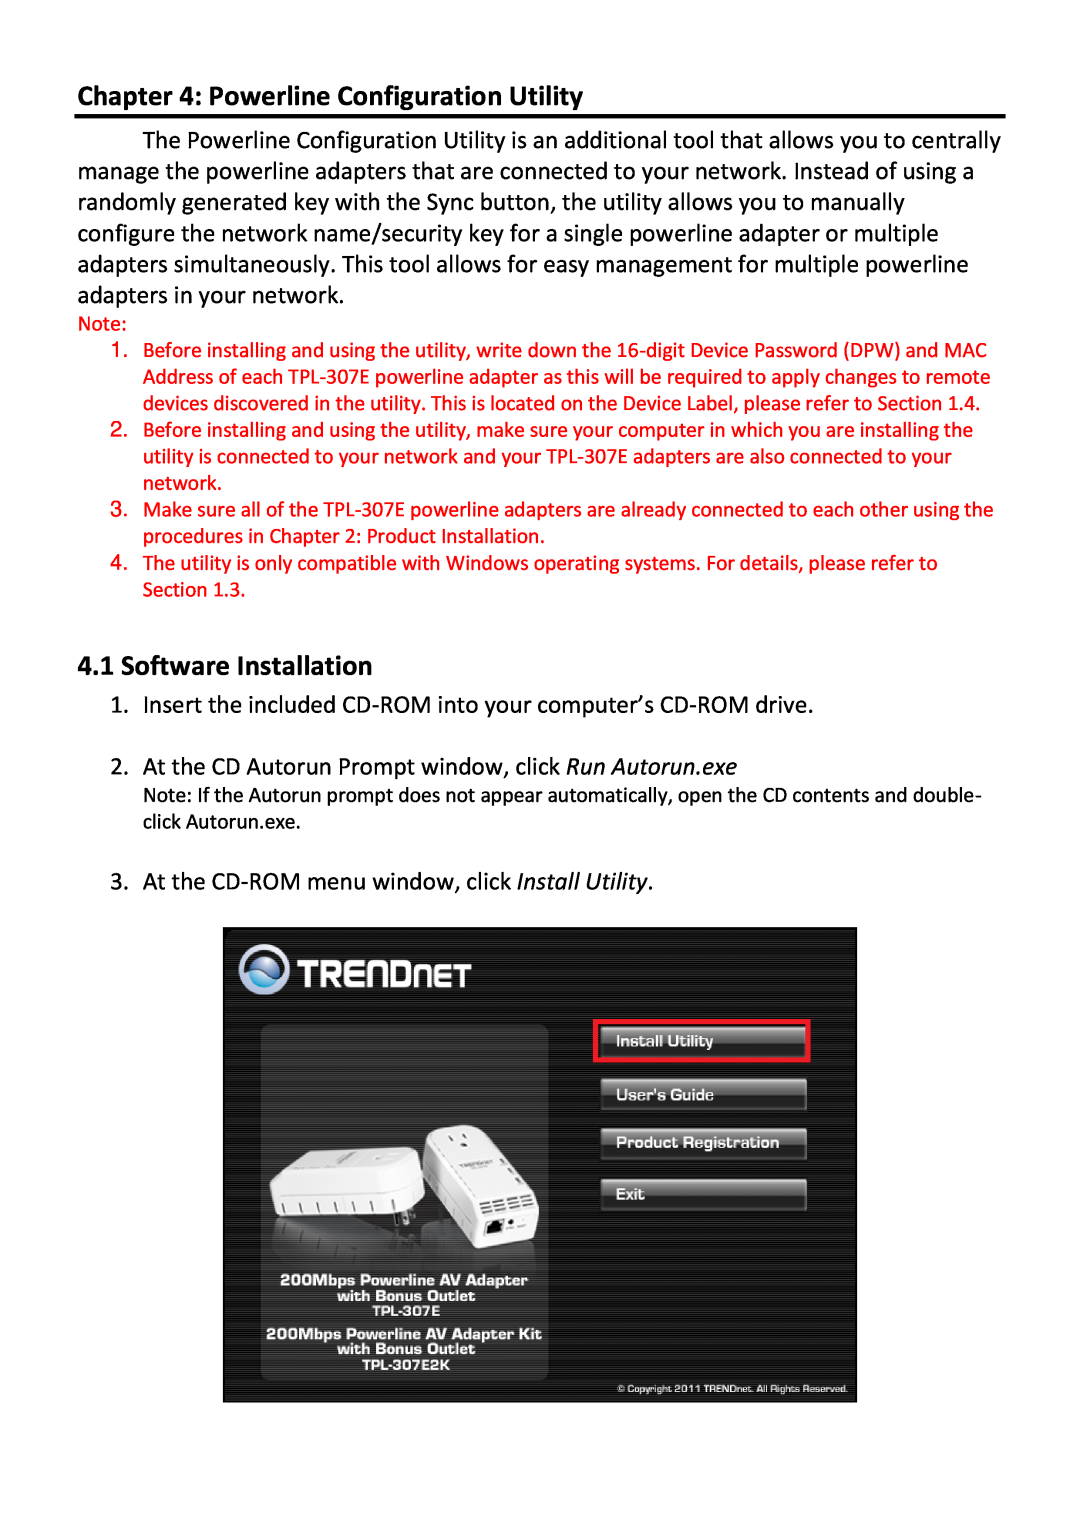 TRENDnet TPL307E2K manual Powerline Configuration Utility, Software Installation 